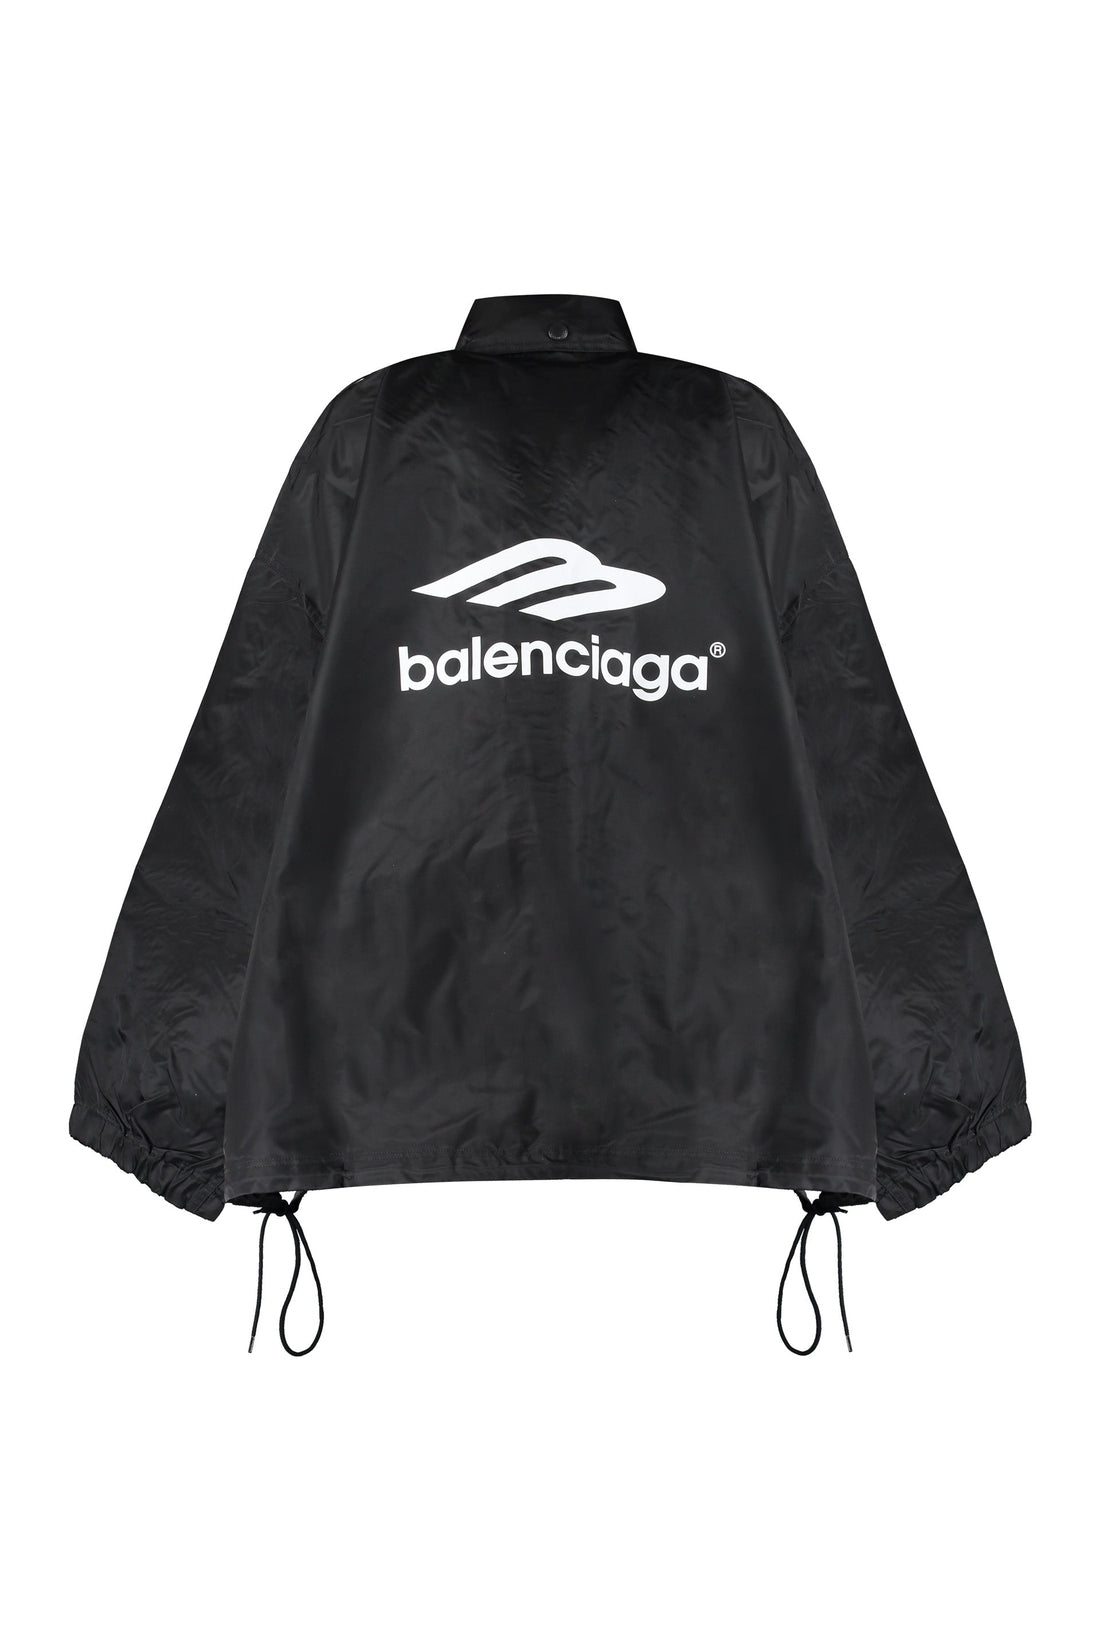 Balenciaga-OUTLET-SALE-Logo embroidery windbreaker-ARCHIVIST